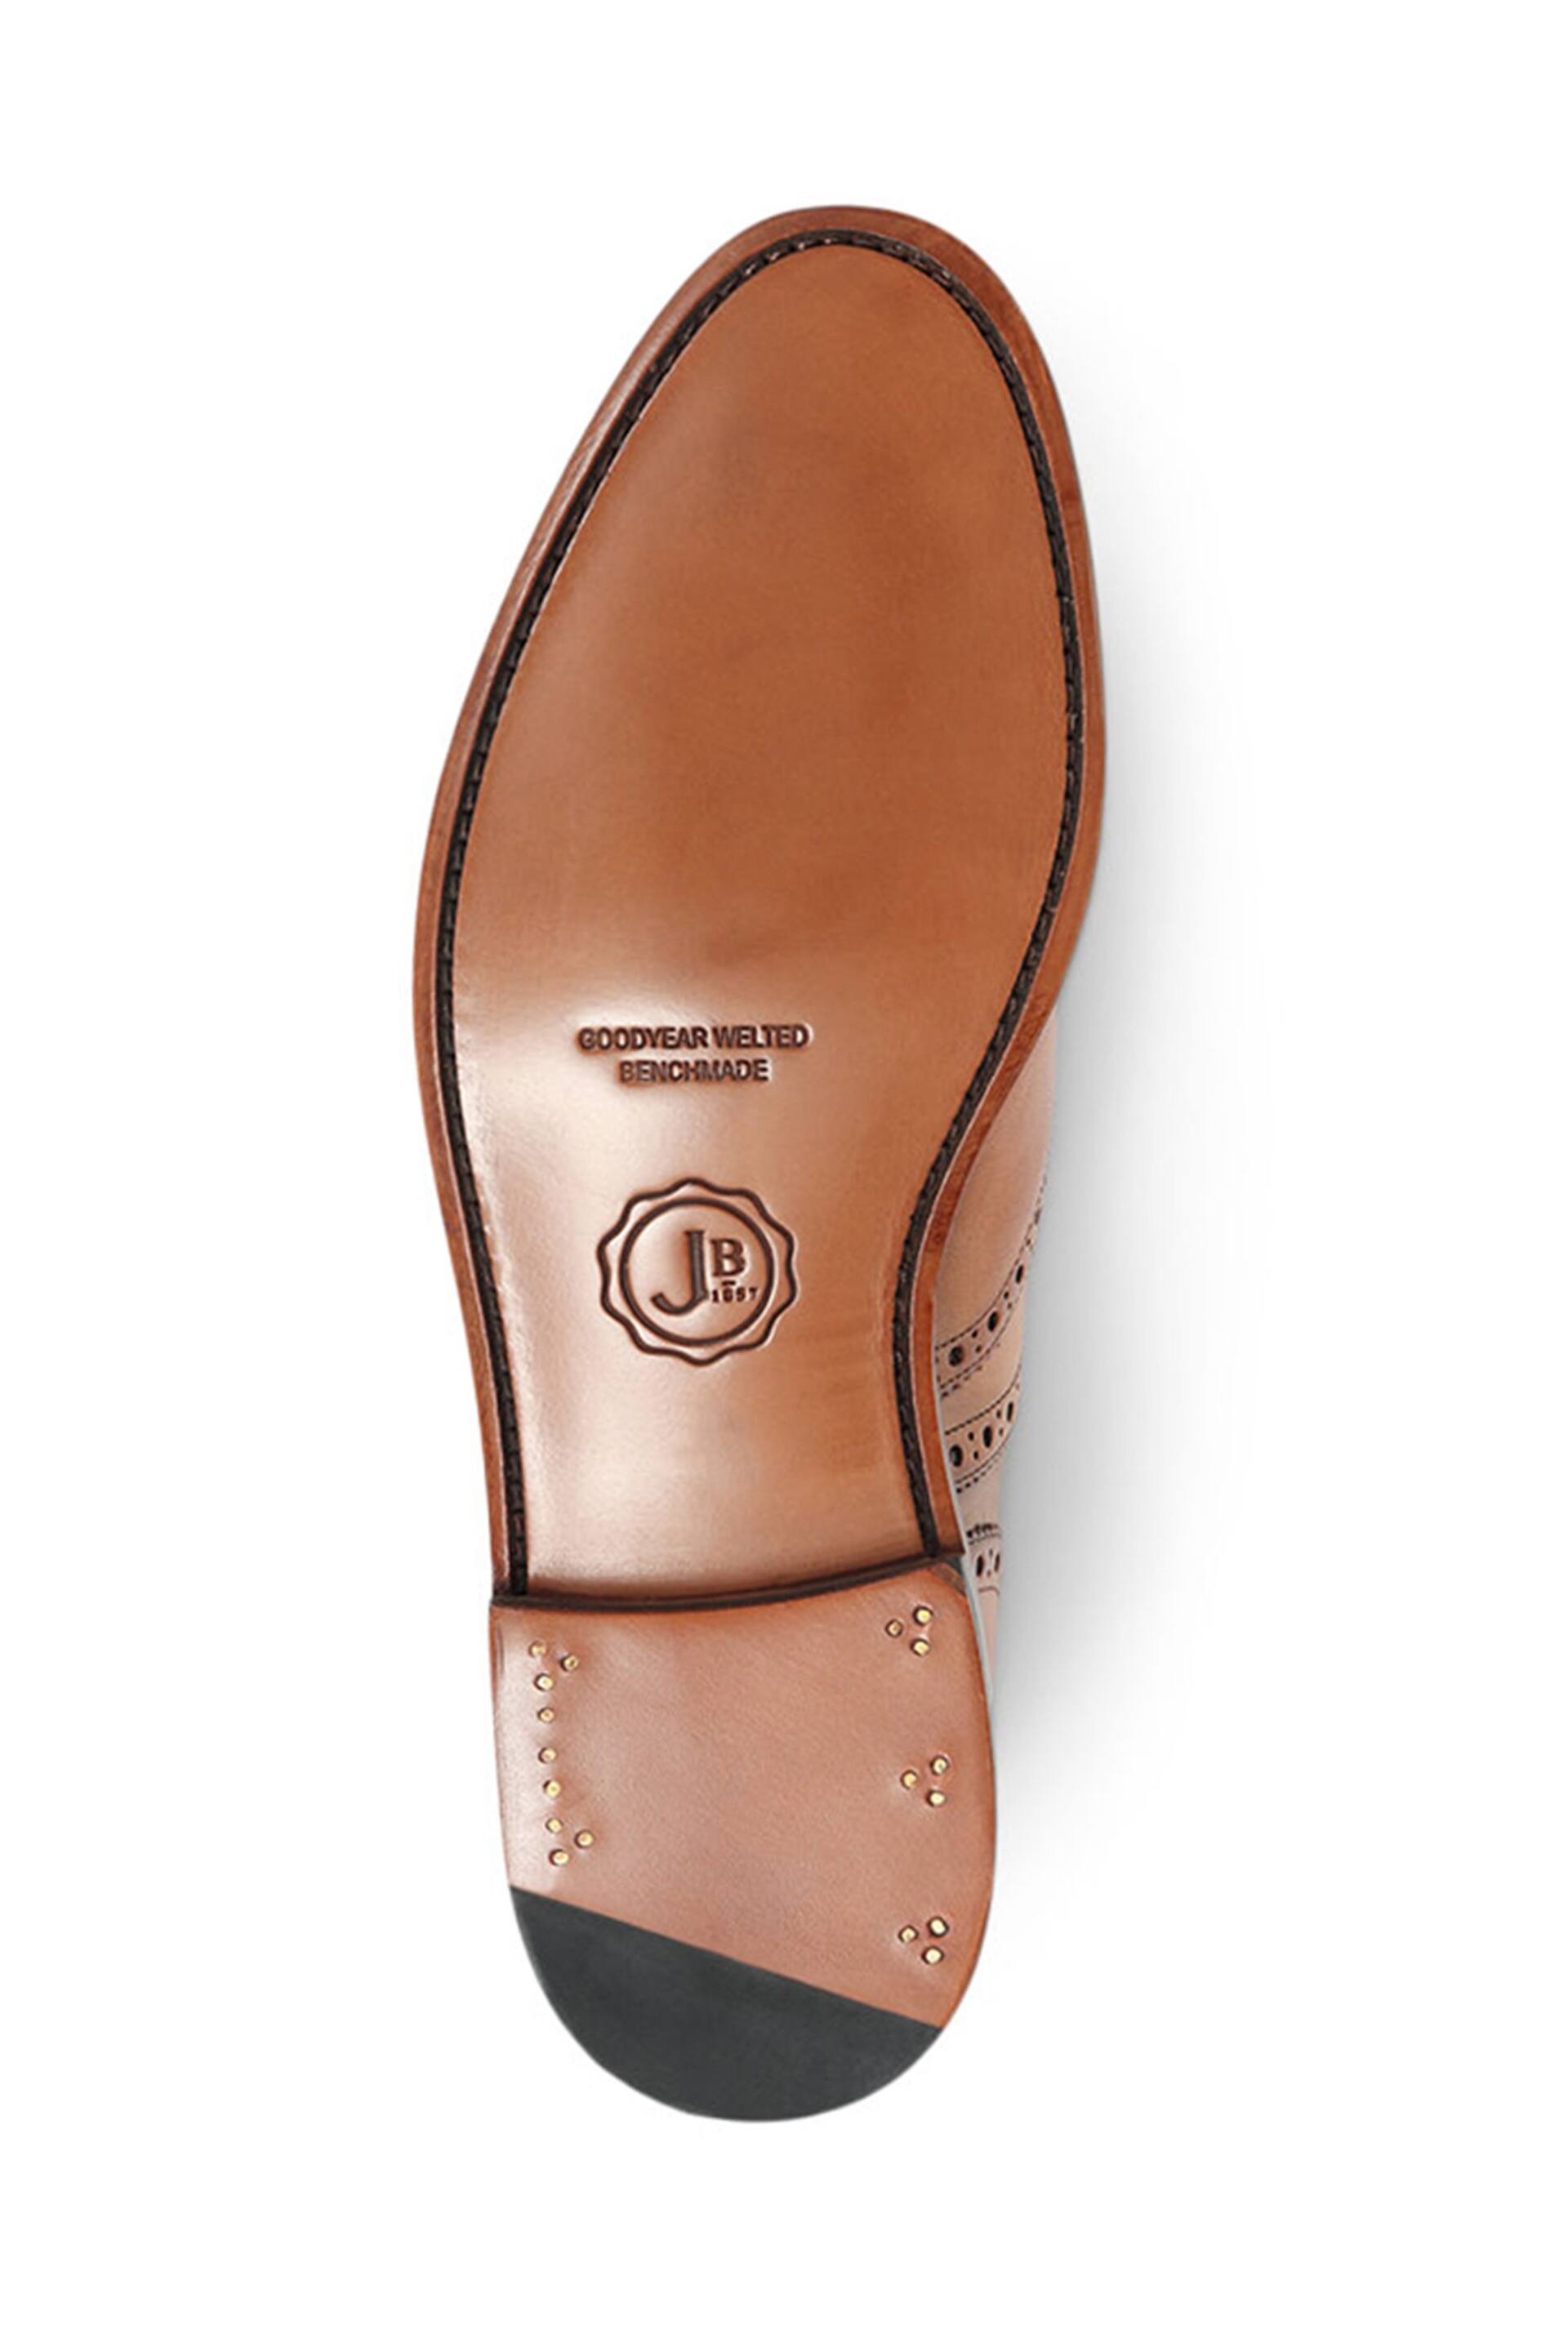 Jones Bootmaker Tan Gents Leather Lace Smart Shoes - Image 6 of 6